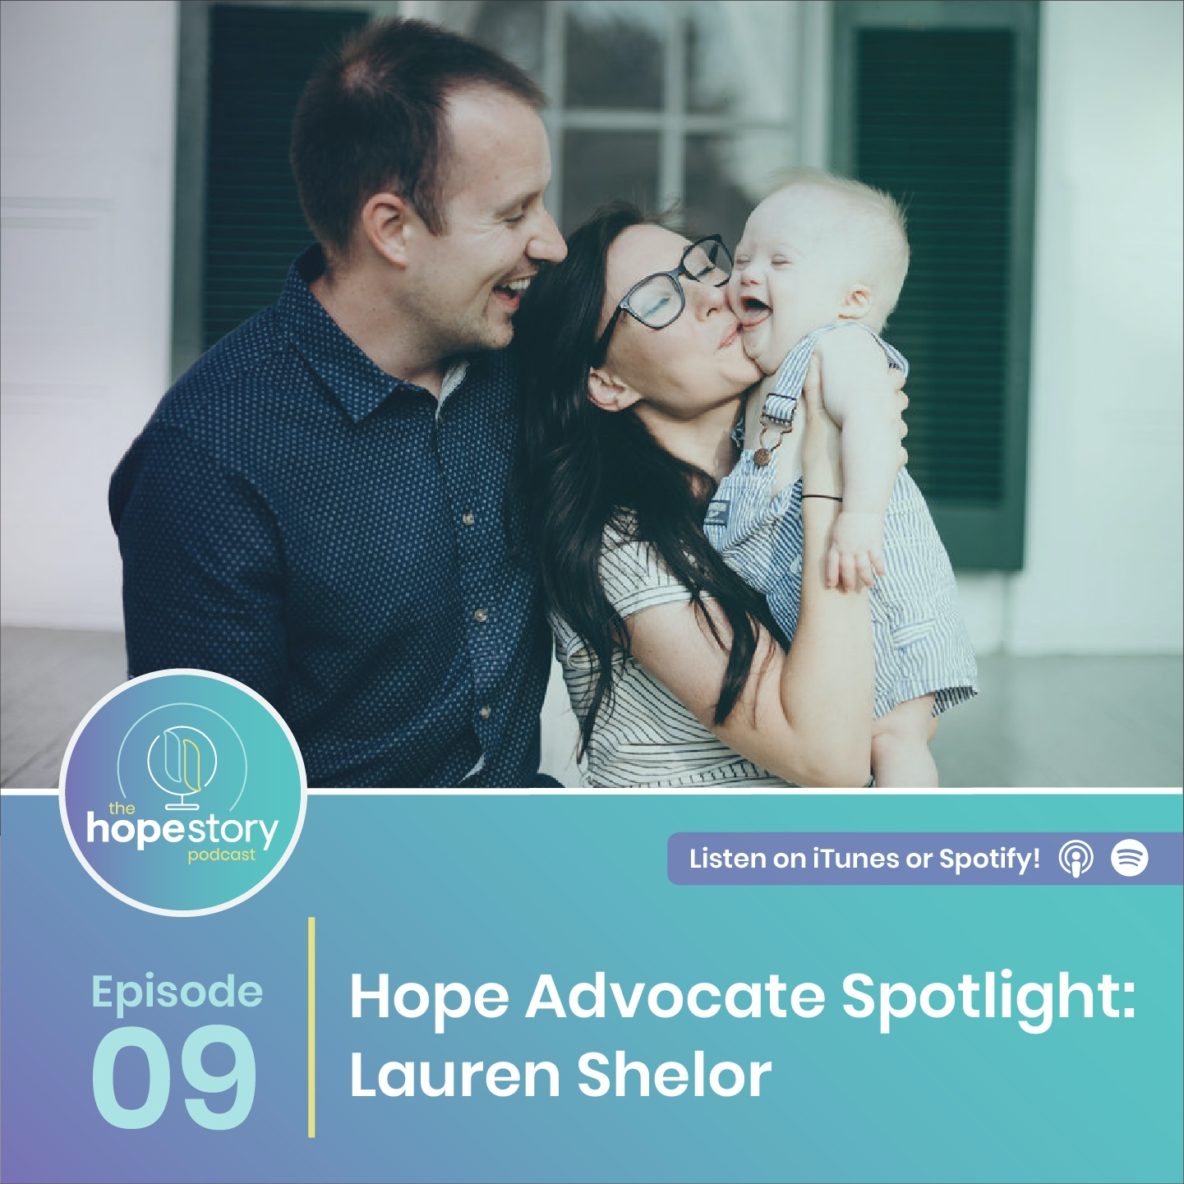 Lauren shelor hope story podcast down syndrome